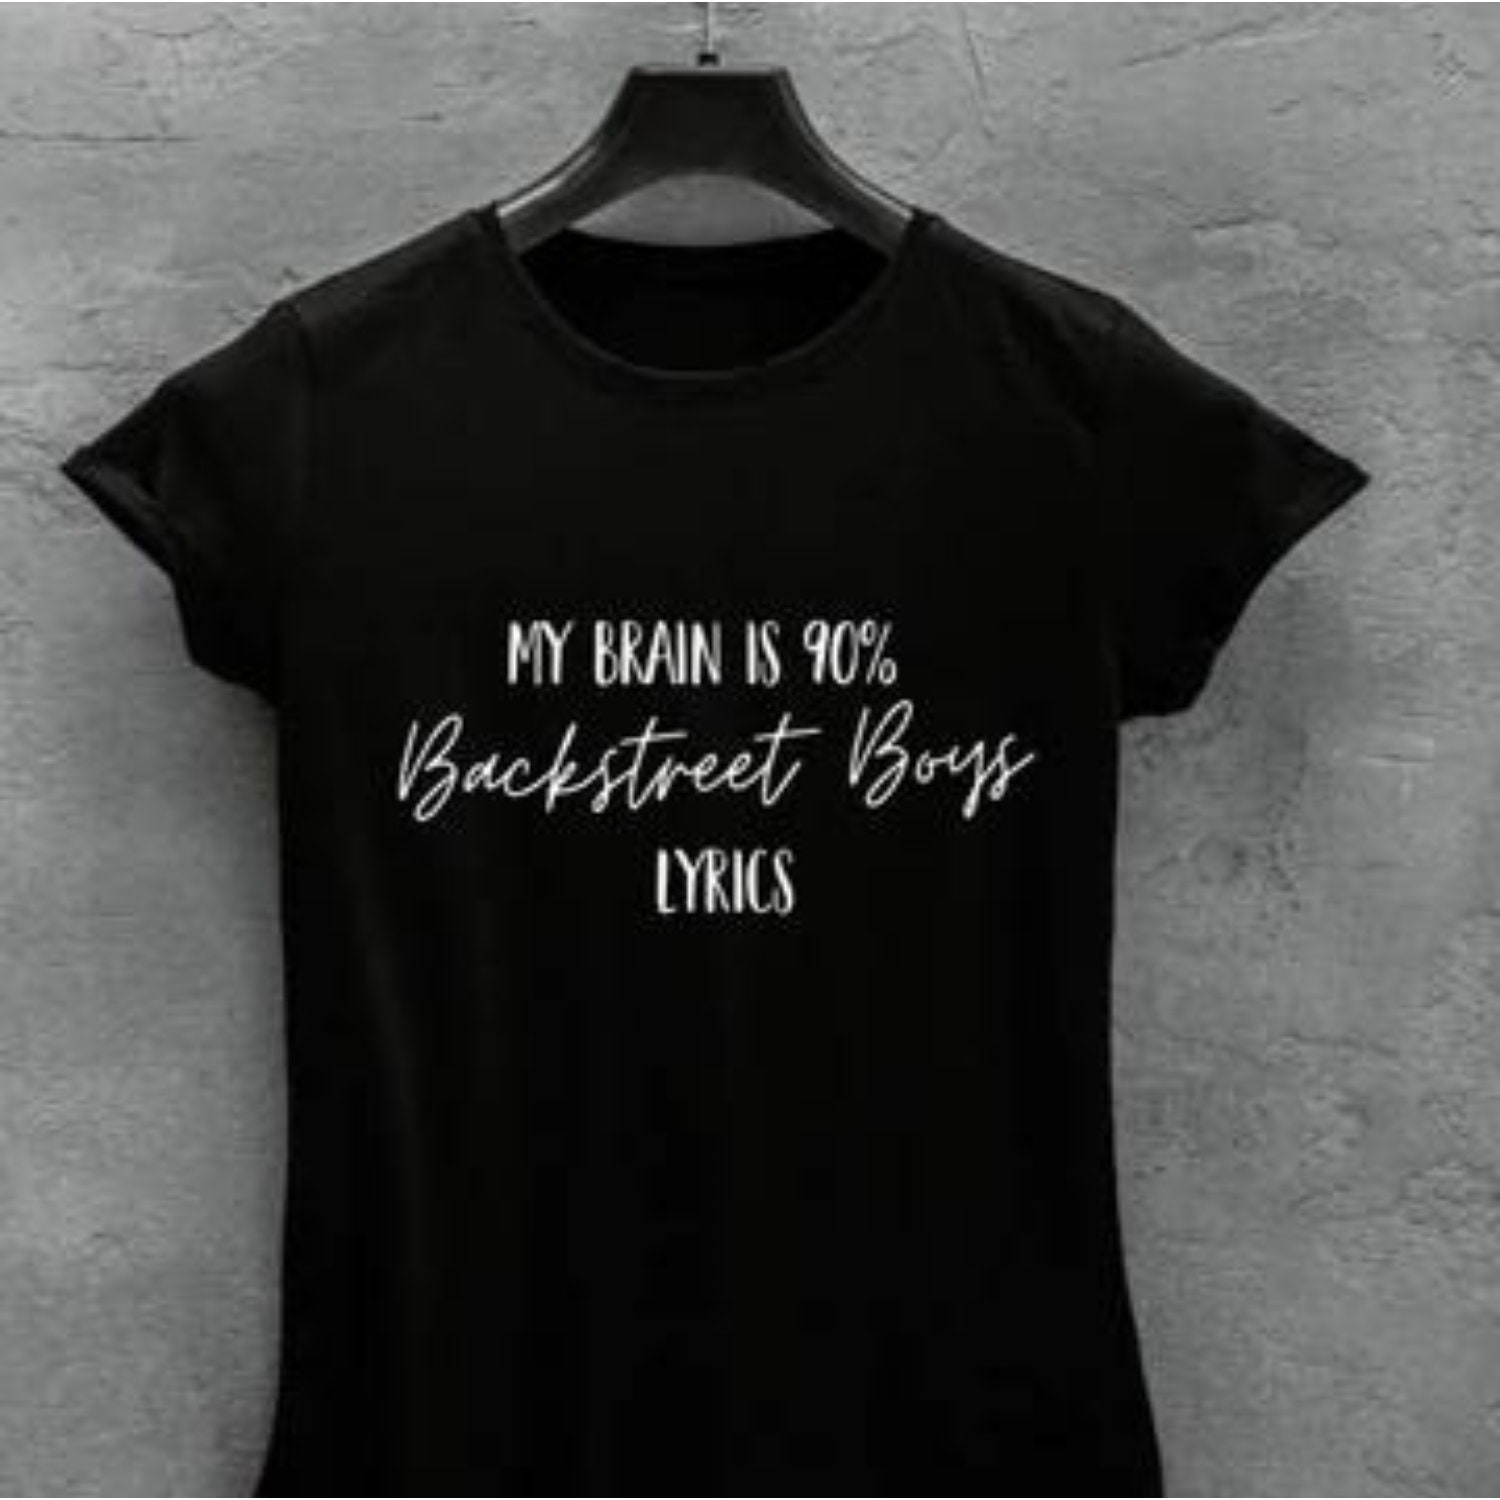 Discover My Brain Is 90% Backstreet Boys Lyrics... T-Shirt